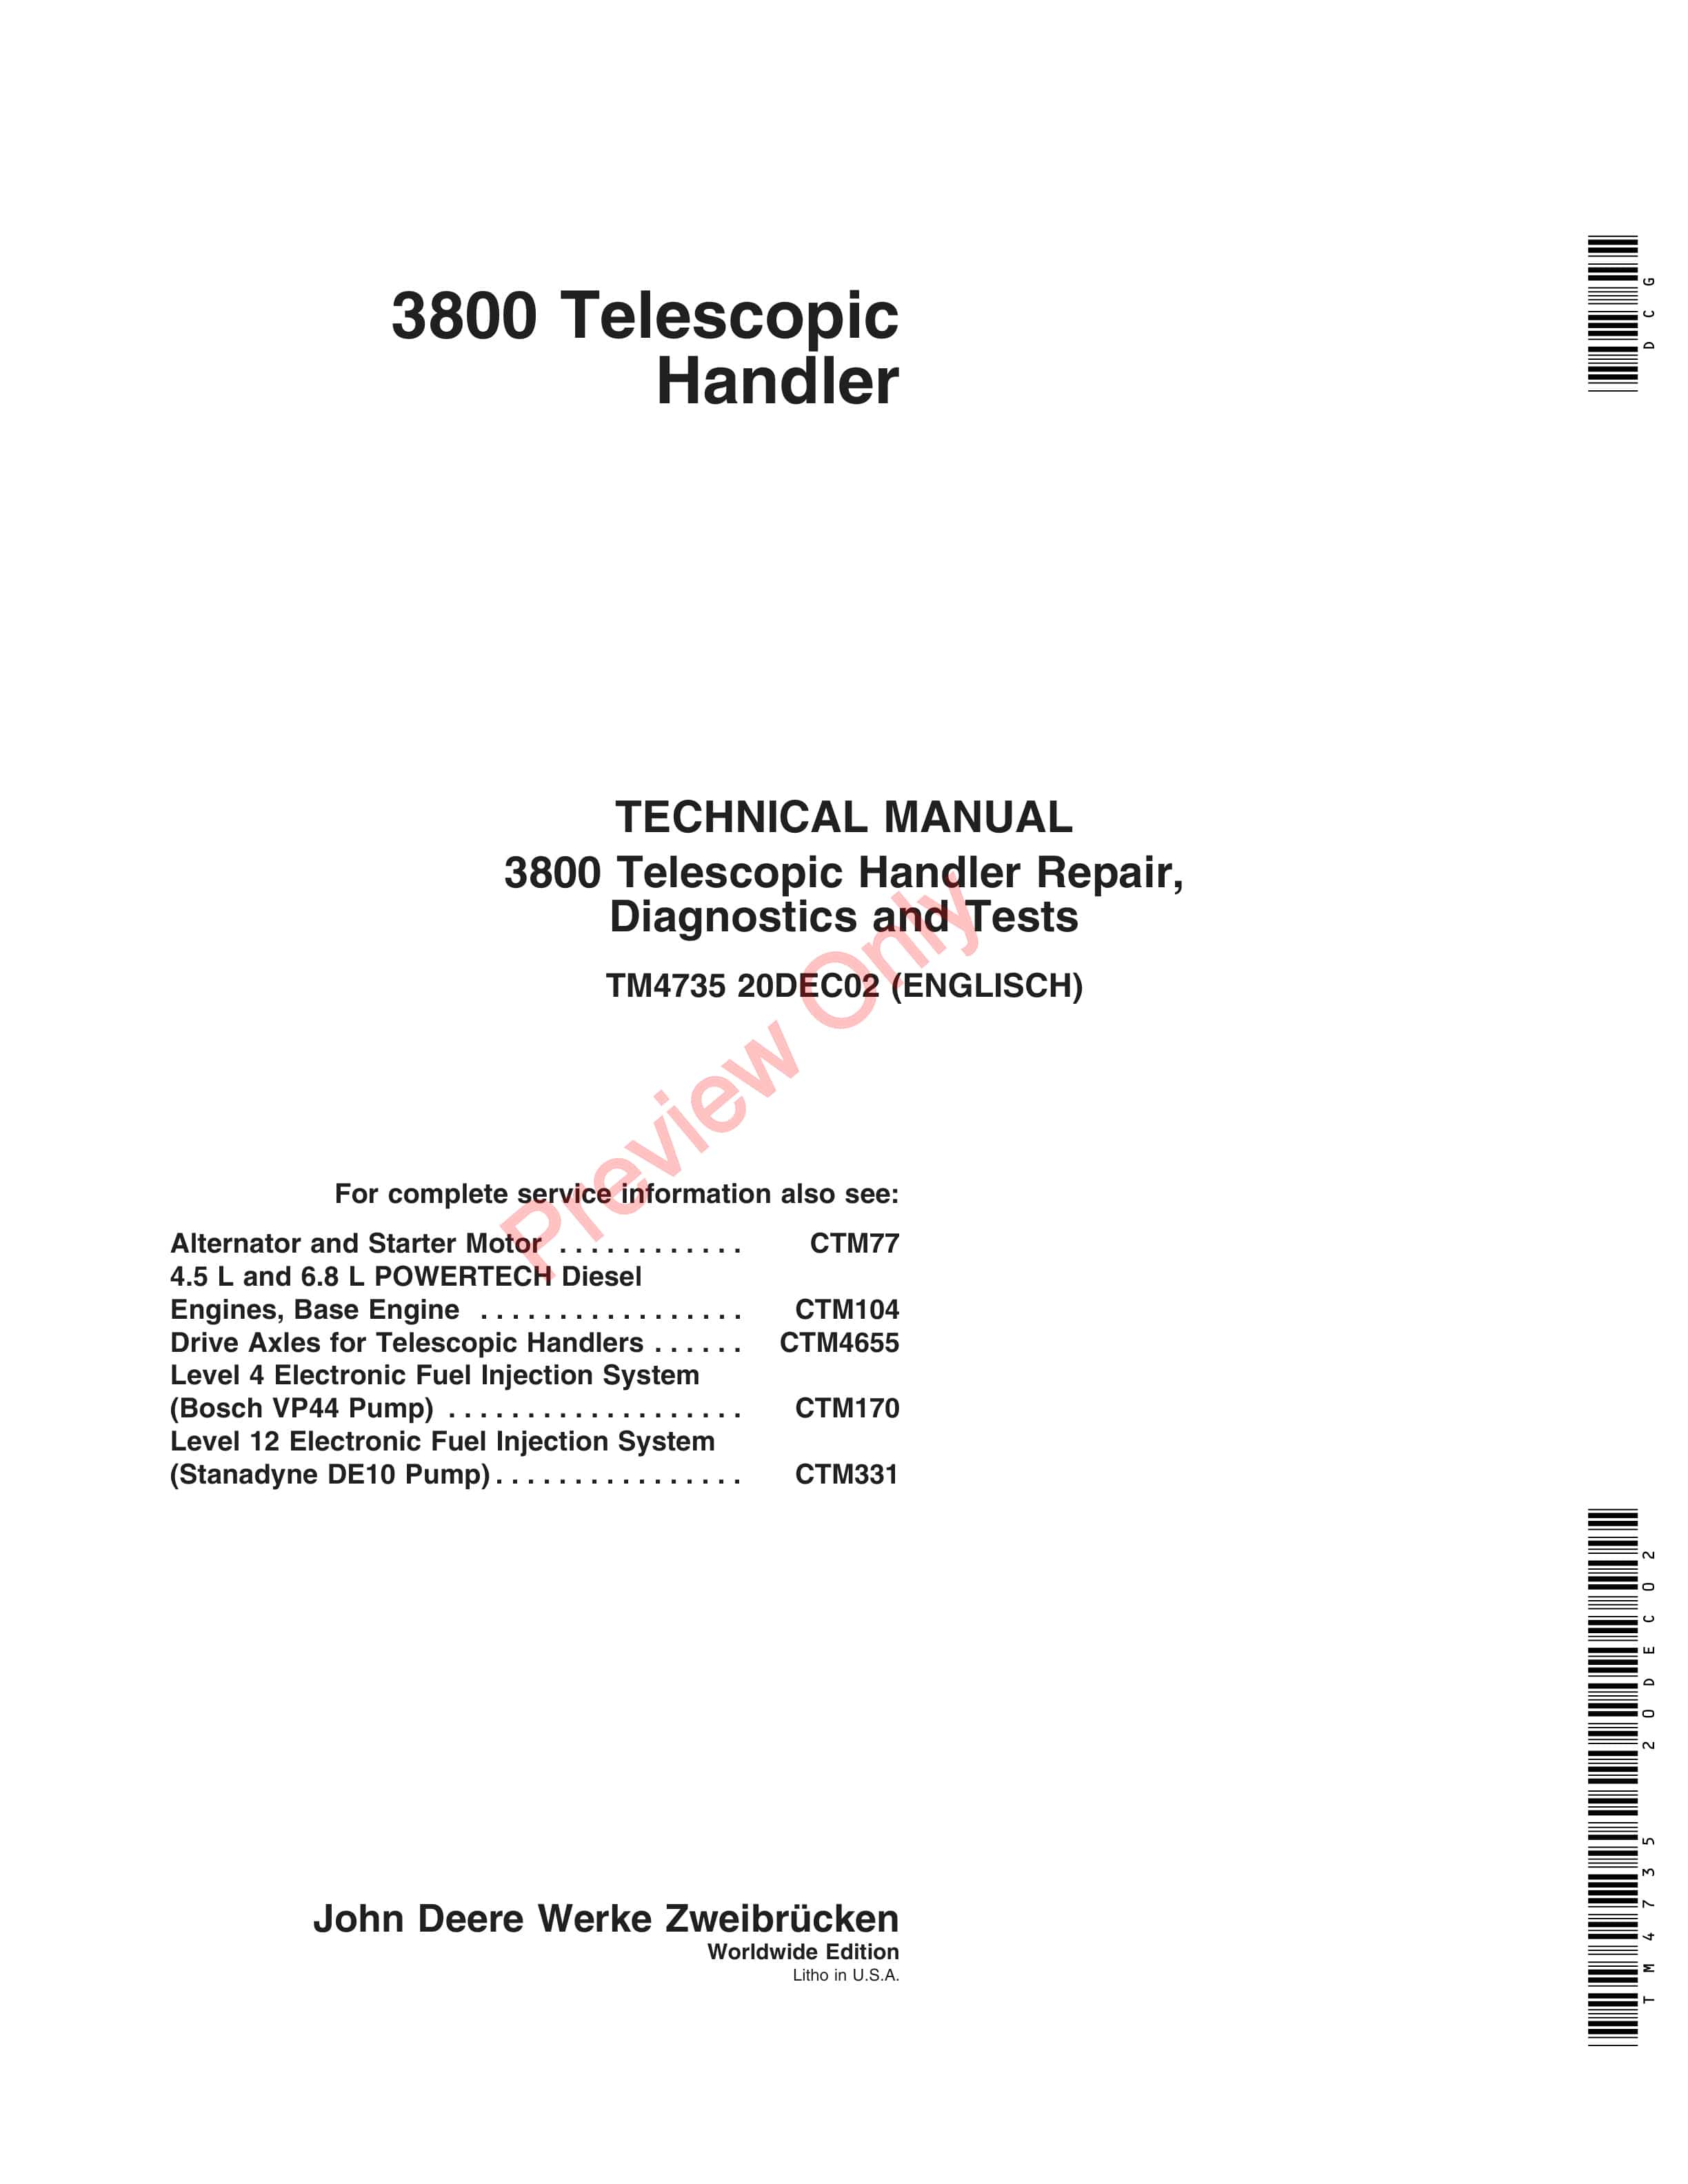 John Deere 3816 Telescopic Handlers Technical Manual TM4735 20DEC02 1